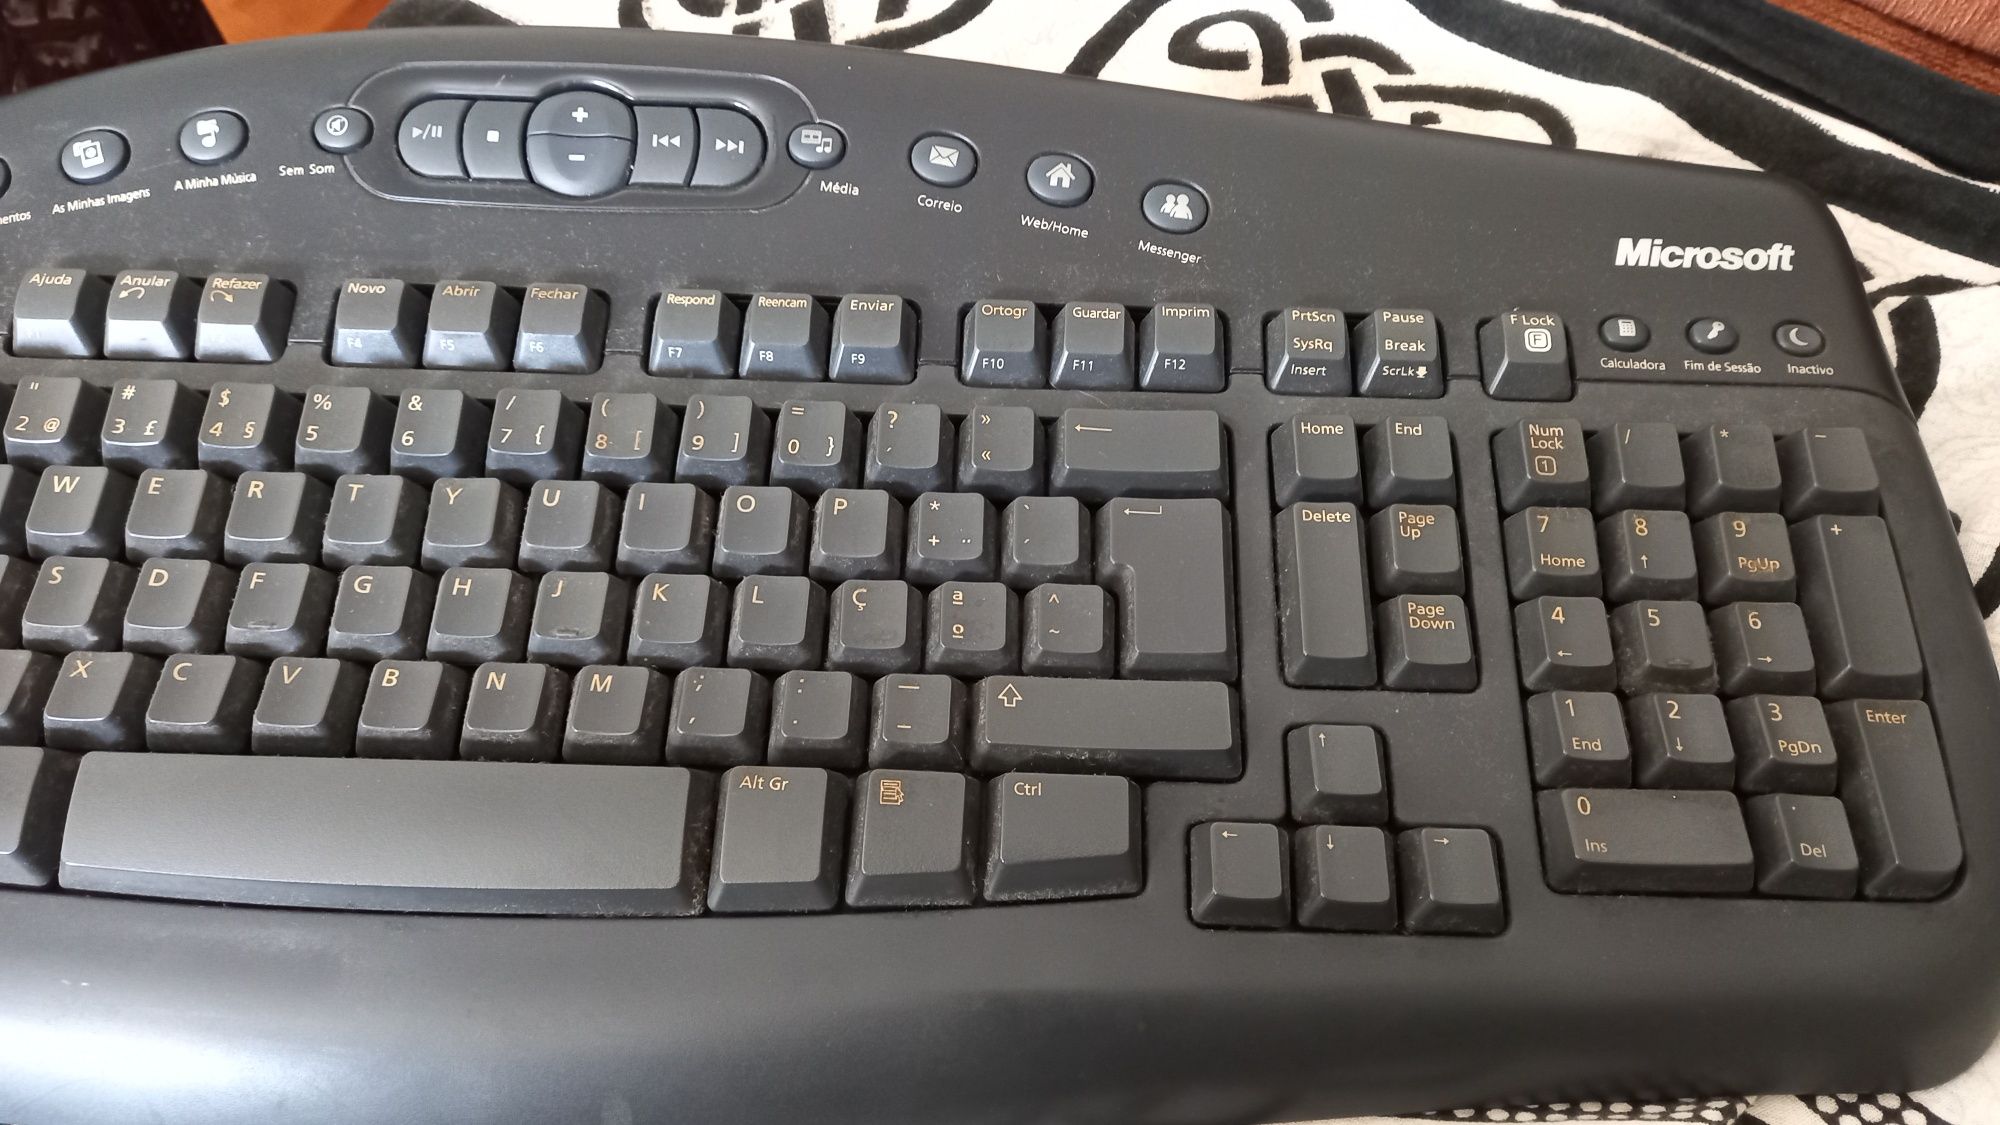 Microsoft Wireless Keyboard